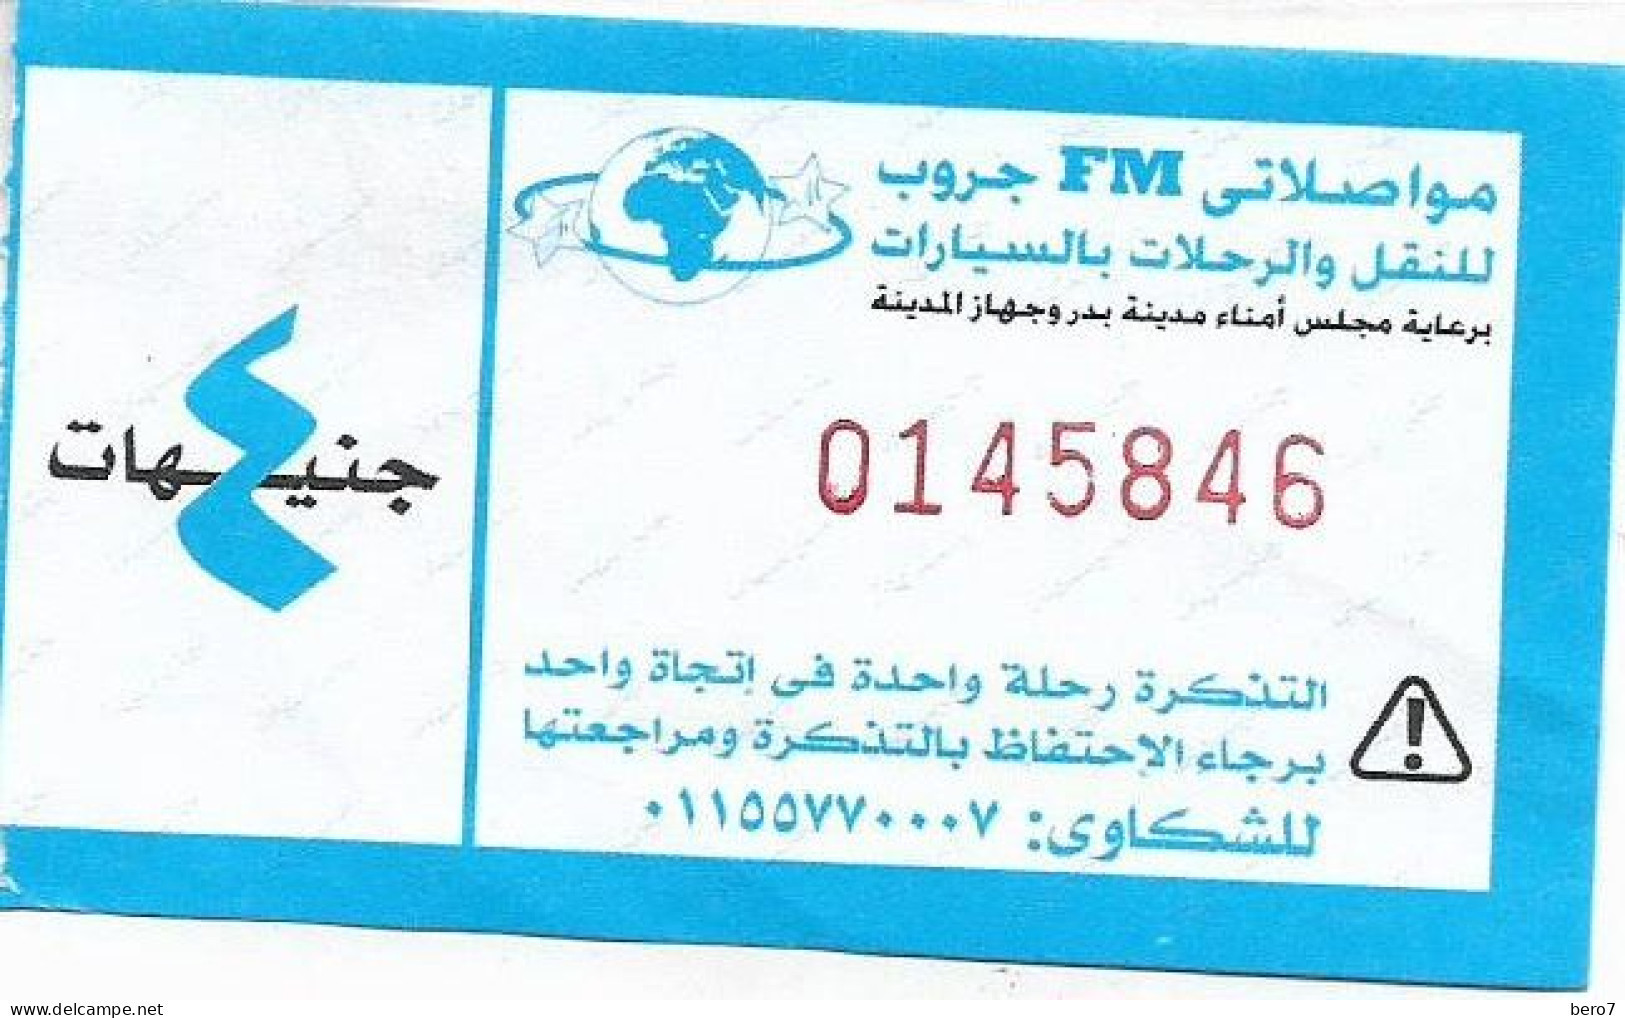 EGYPT Transportation Ticket  (Egypte) (Egitto) (Ägypten) (Egipto) (Egypten) - Welt